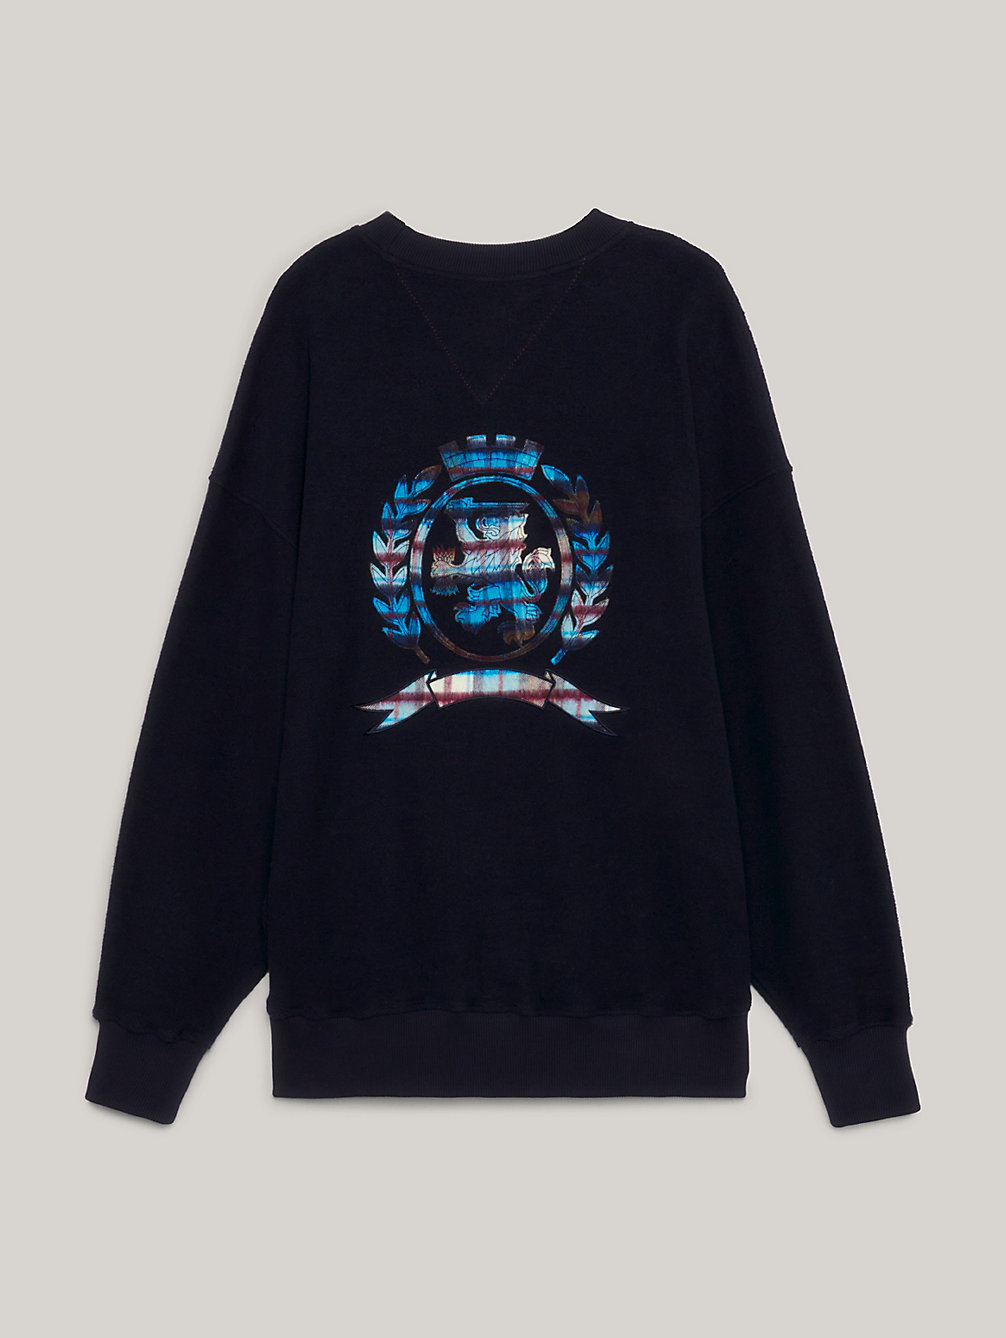 blue tartan crest logo oversized sweatshirt for men tommy hilfiger